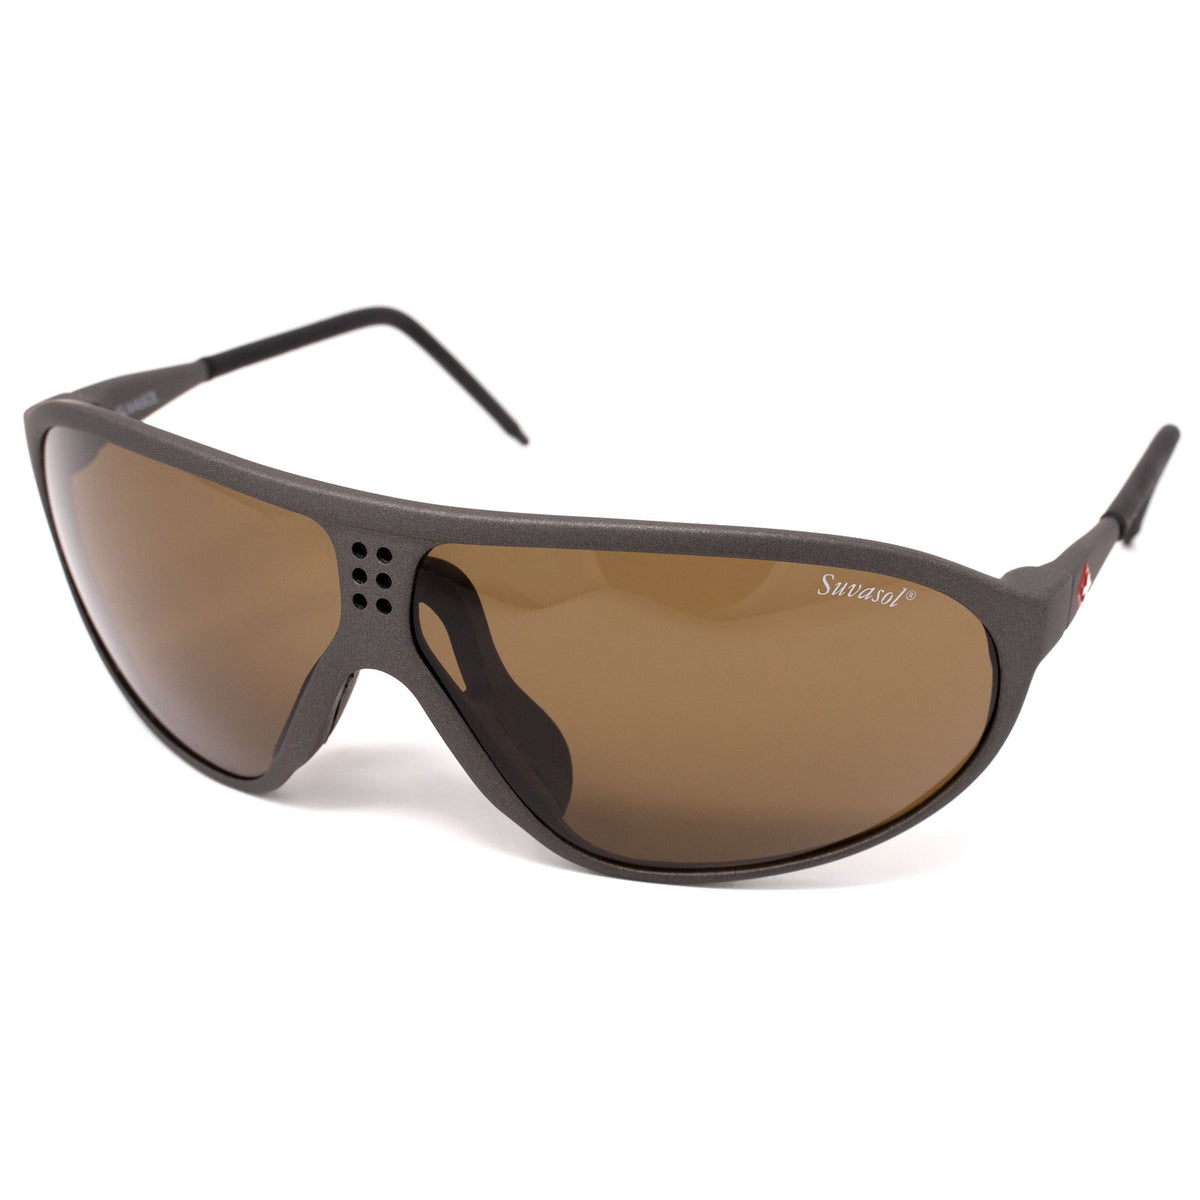 Swiss Army Sunglasses | Suvasol Brand